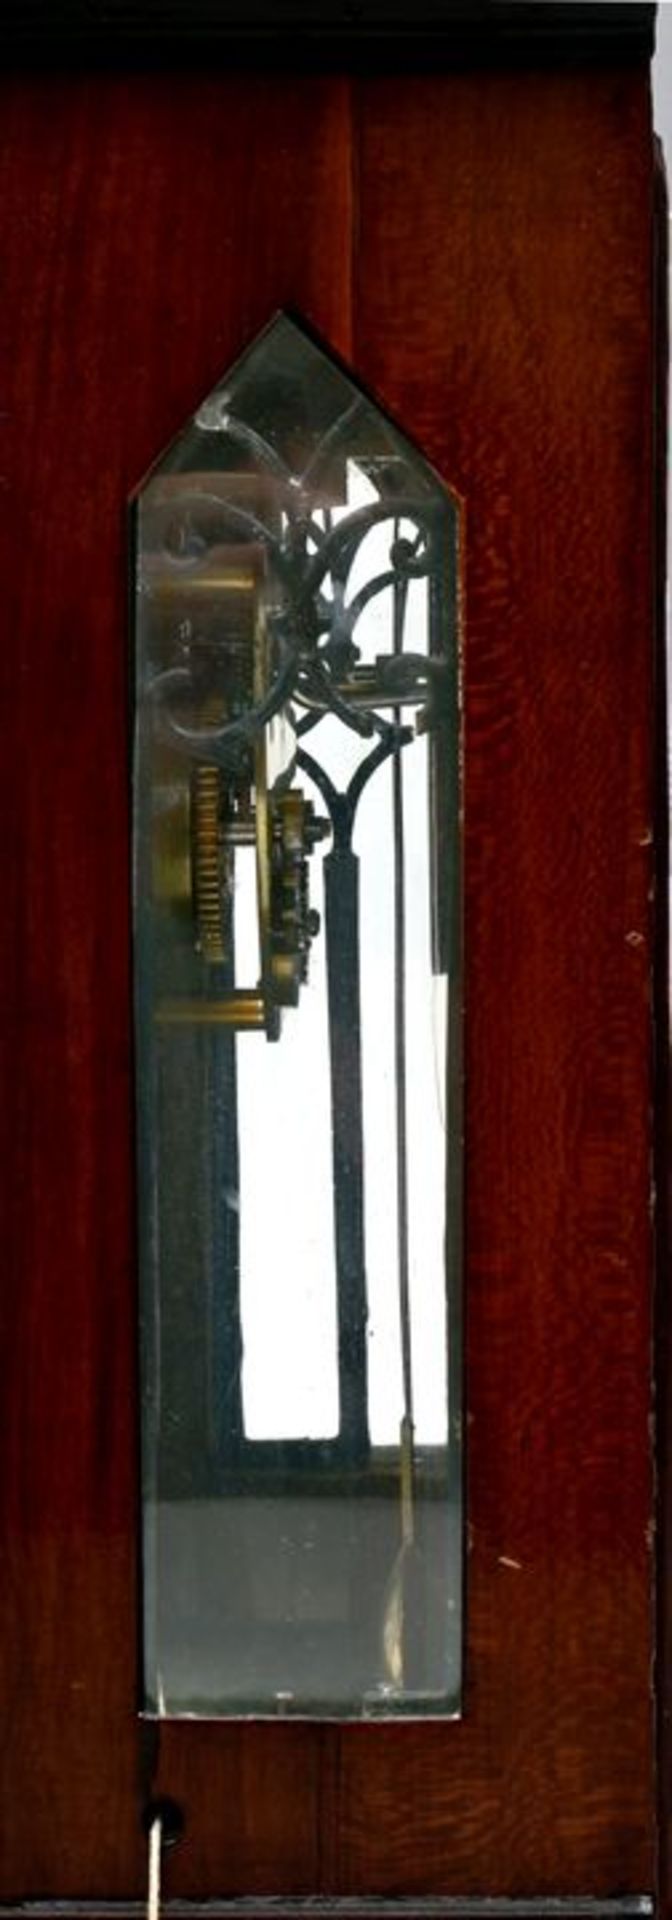 Tischuhr, Holzkorpus / Table clock, wooden corpus - Bild 2 aus 7